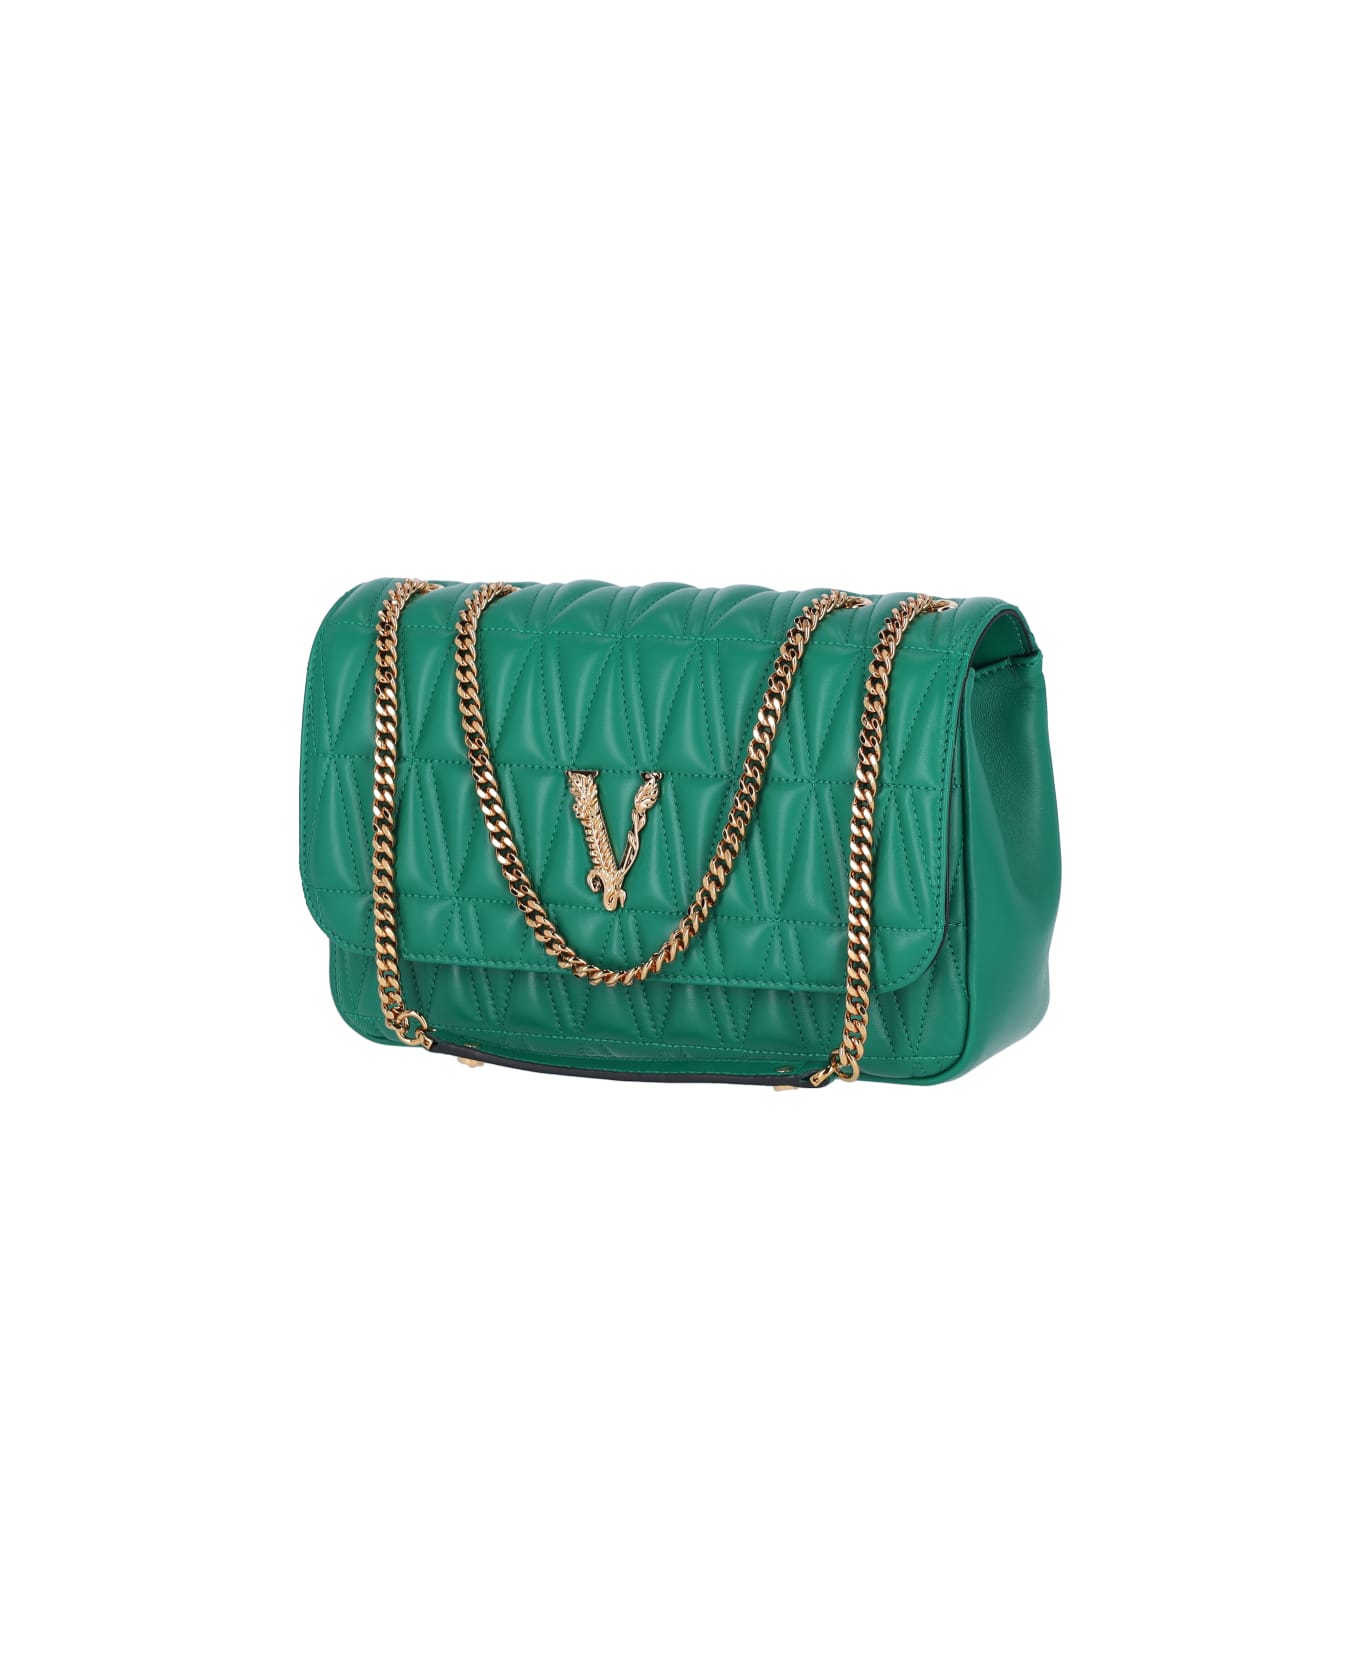 Versace Shoulder Bag - Green